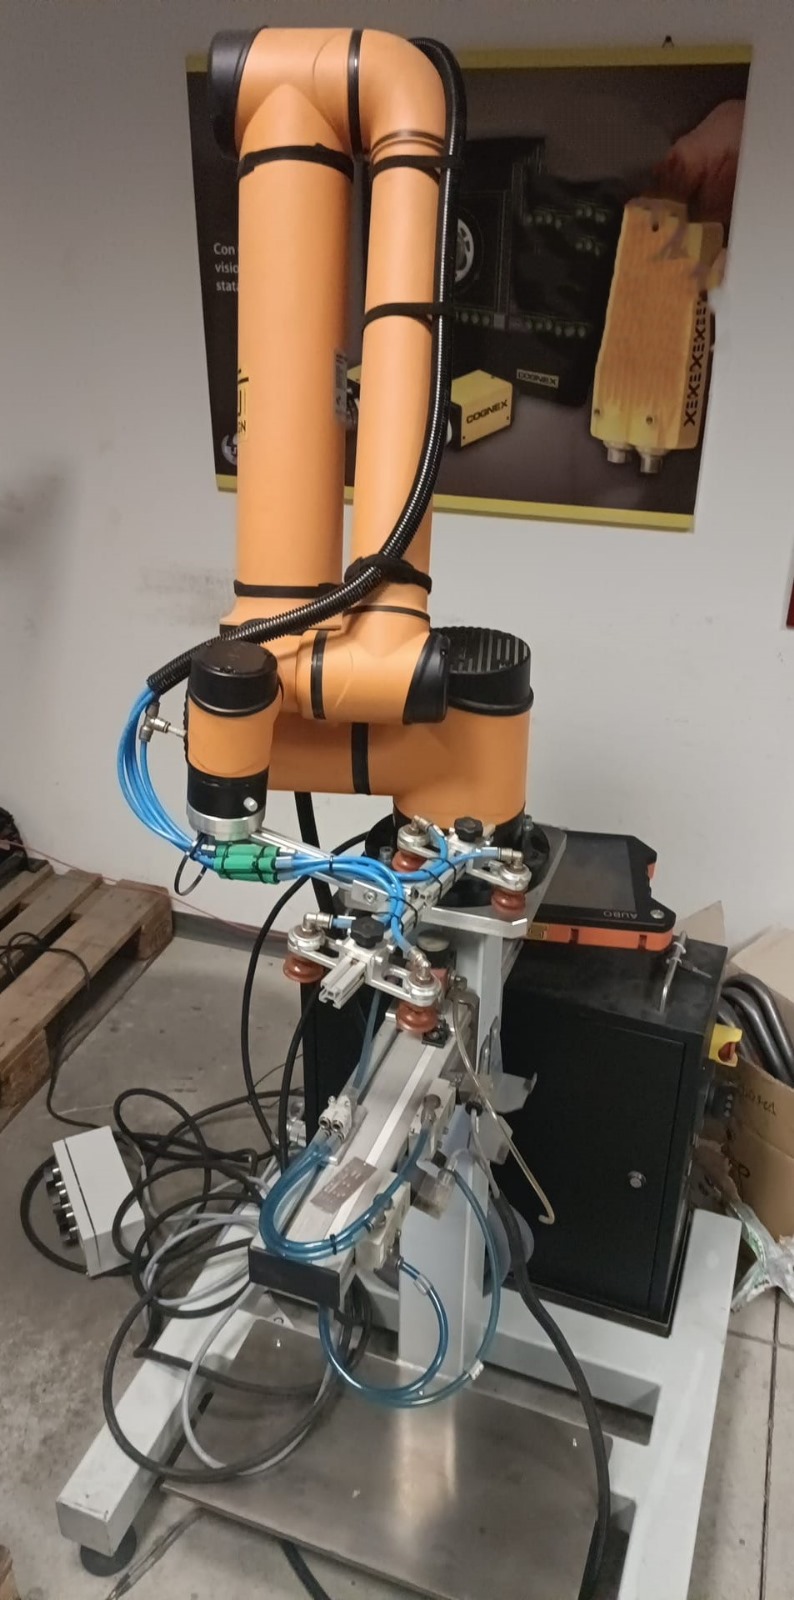 Robot collaborativo 10kg AUBO-i10 Targa in vendita - foto 1